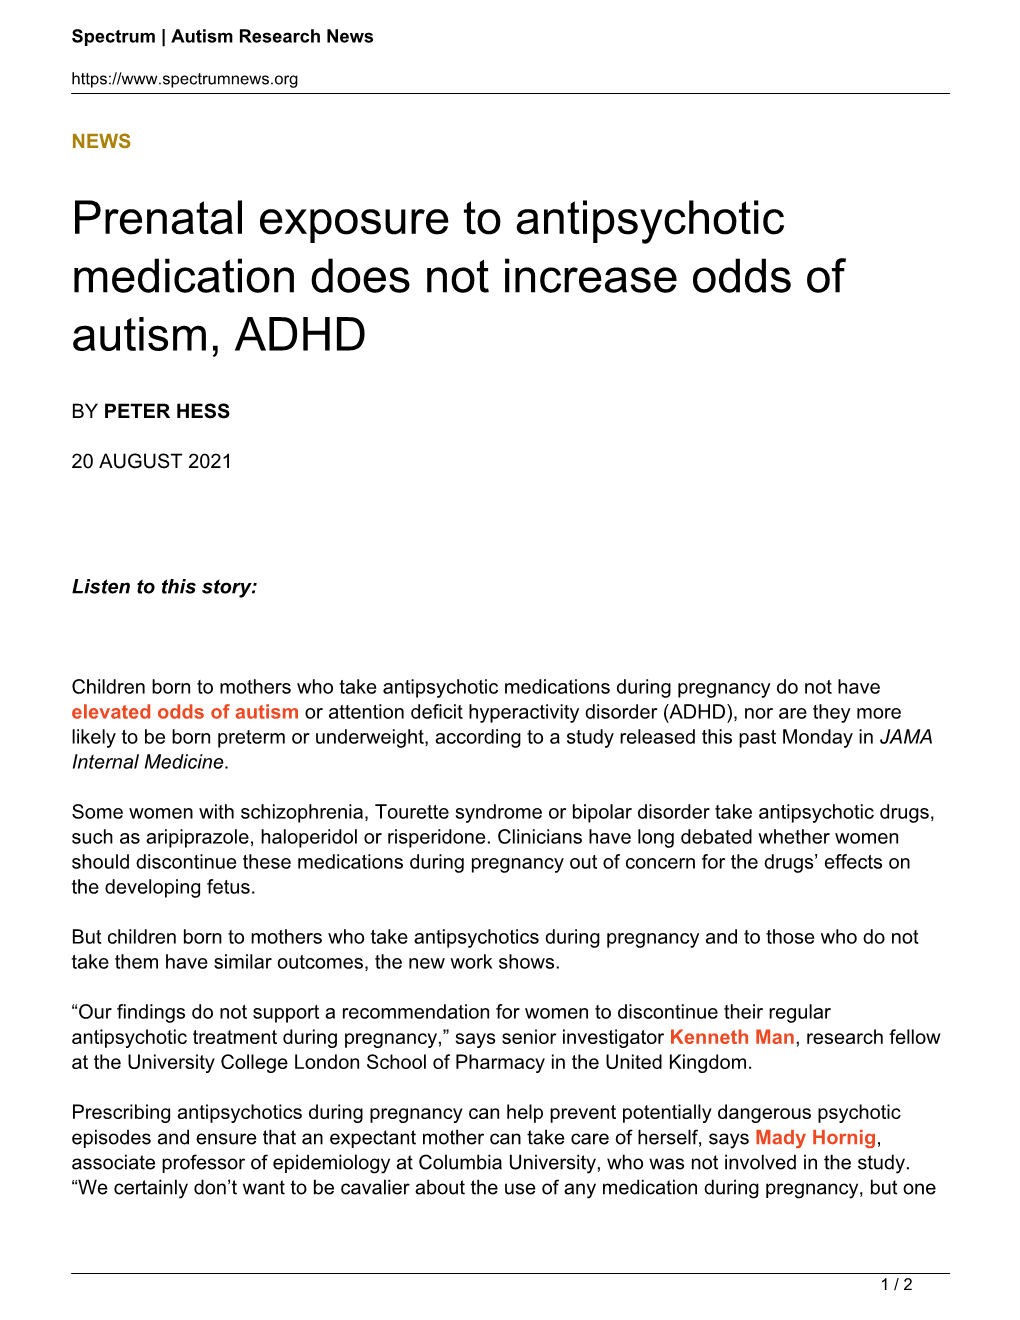 Prenatal Exposure to Antipsychotic Medication Does Not Increase Odds of Autism, ADHD